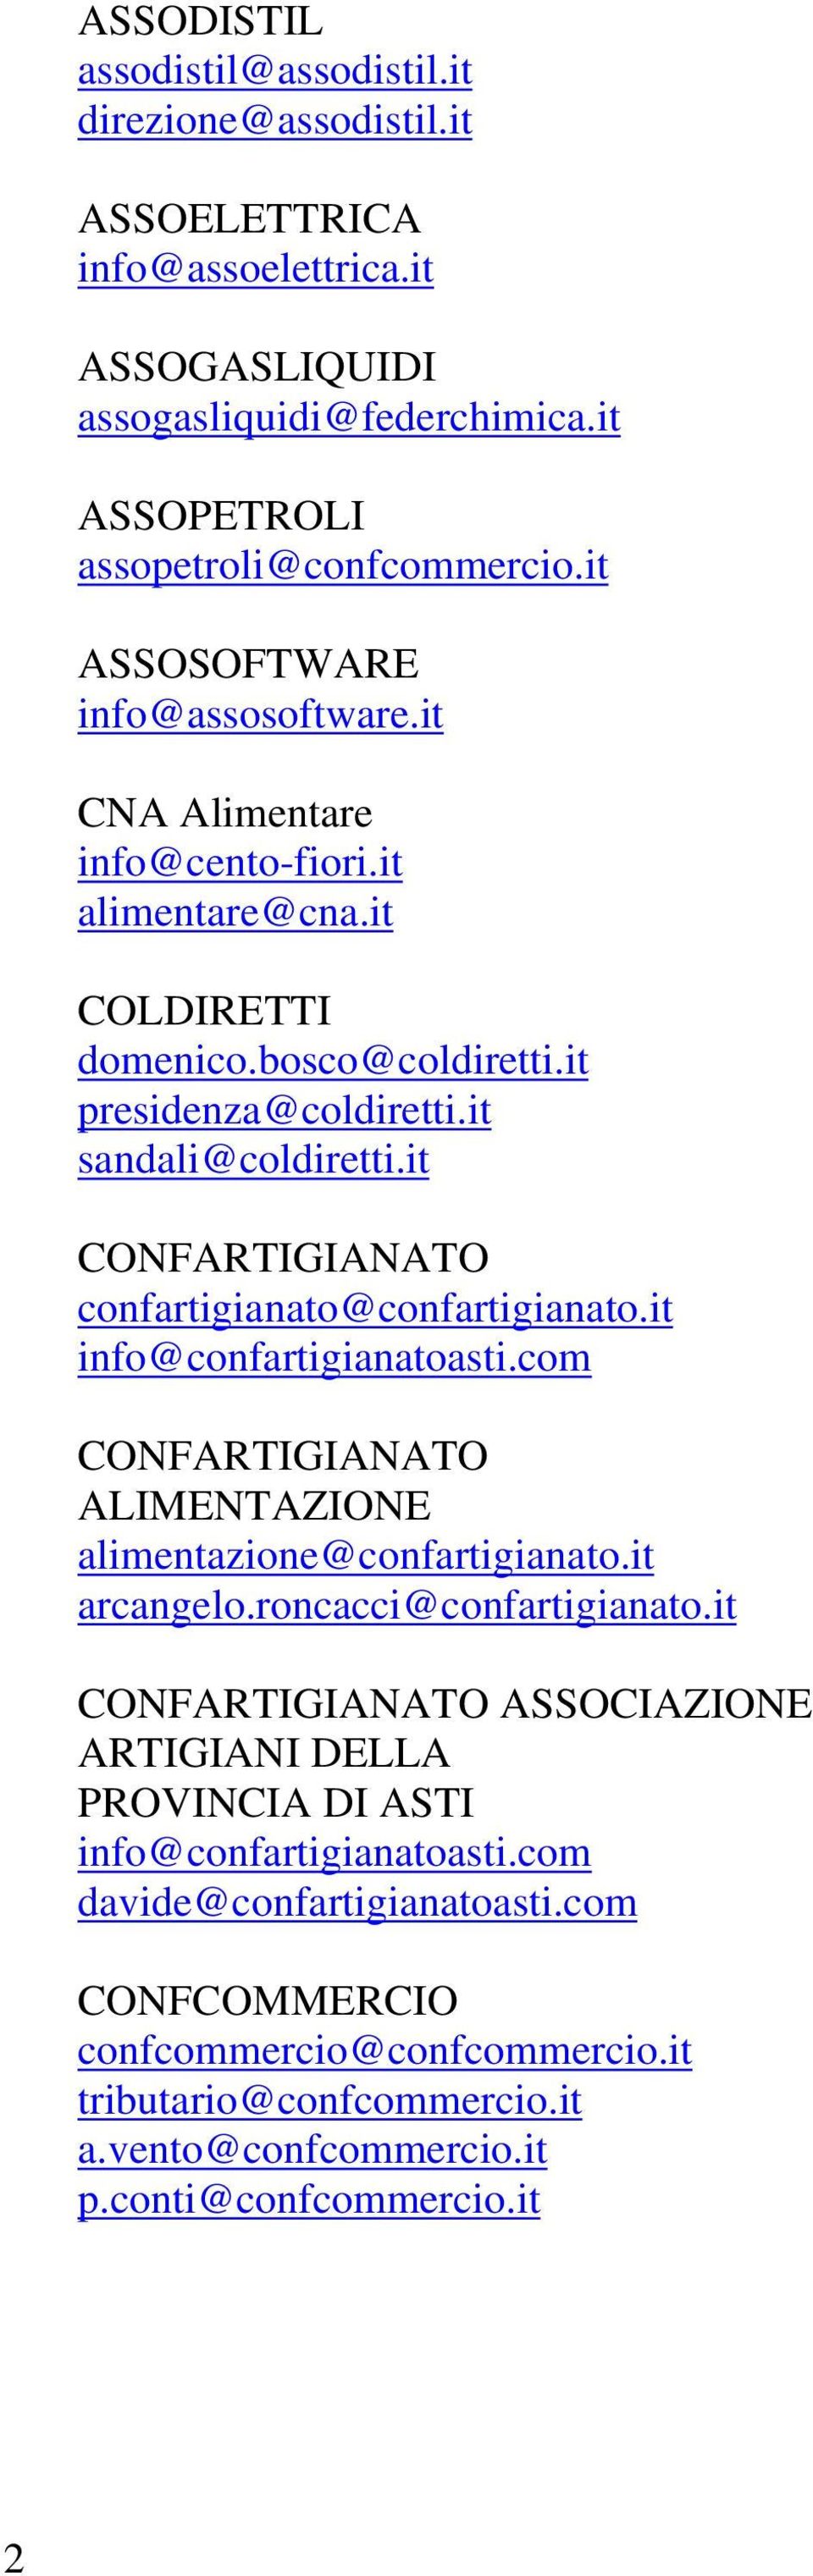 it CONFARTIGIANATO confartigianato@confartigianato.it info@confartigianatoasti.com CONFARTIGIANATO ALIMENTAZIONE alimentazione@confartigianato.it arcangelo.roncacci@confartigianato.